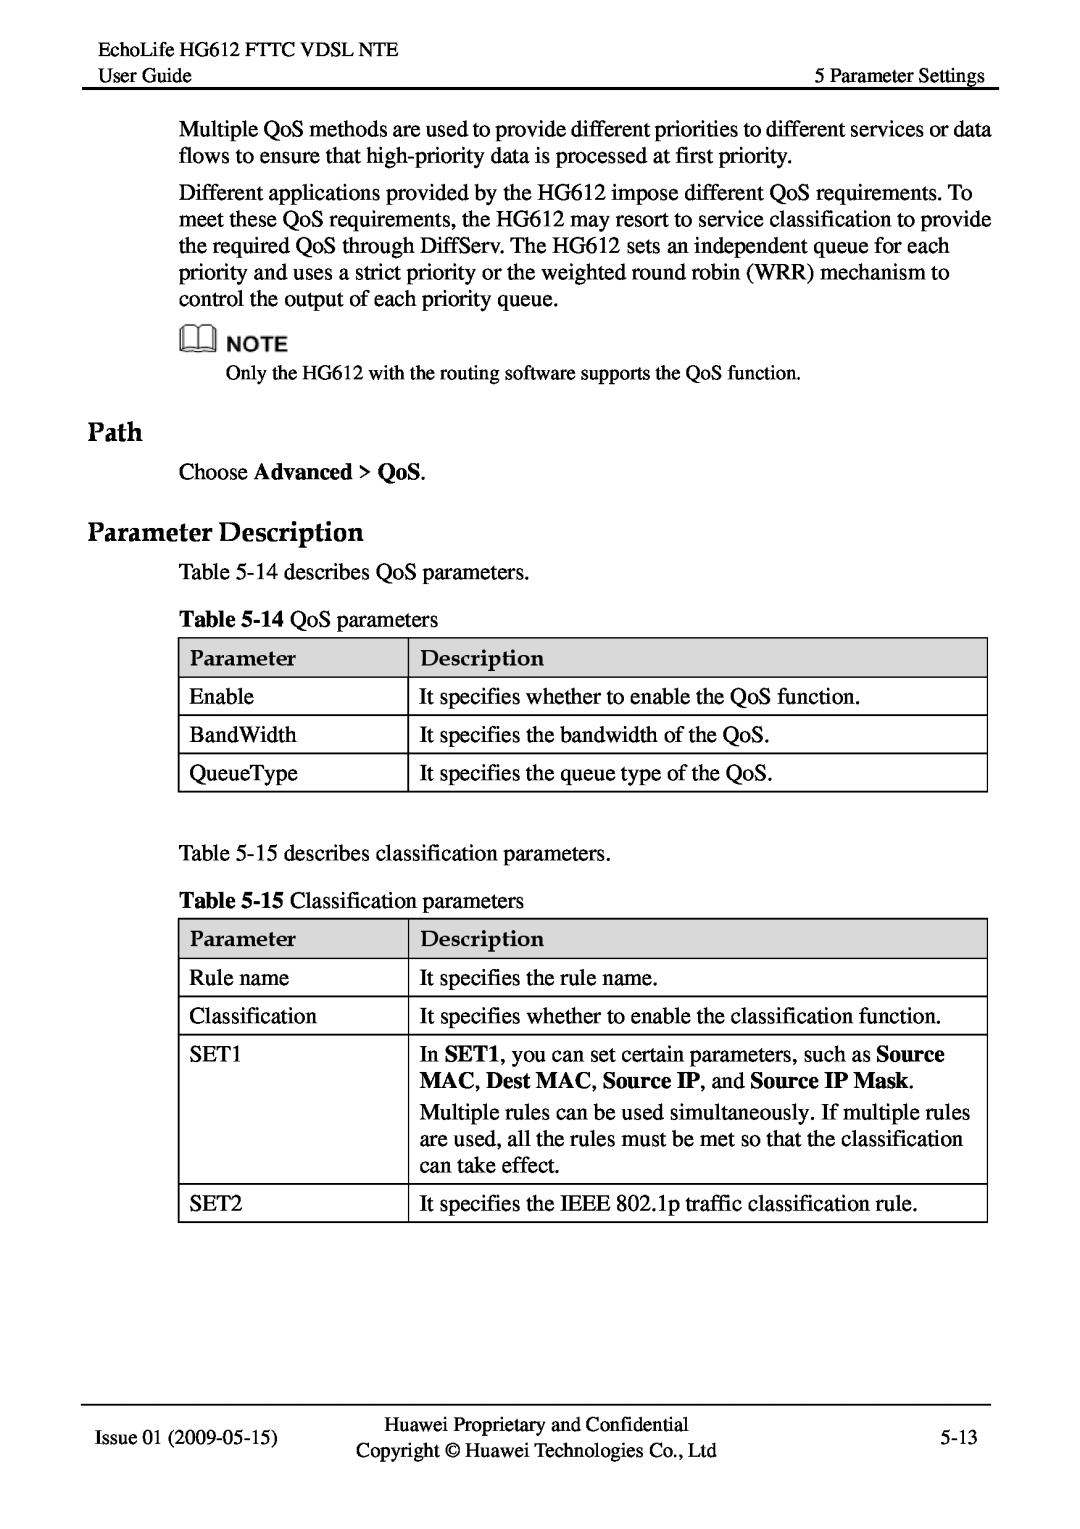 Huawei HG612FTTC VDSL NTE manual Path, Parameter Description, Choose Advanced QoS 